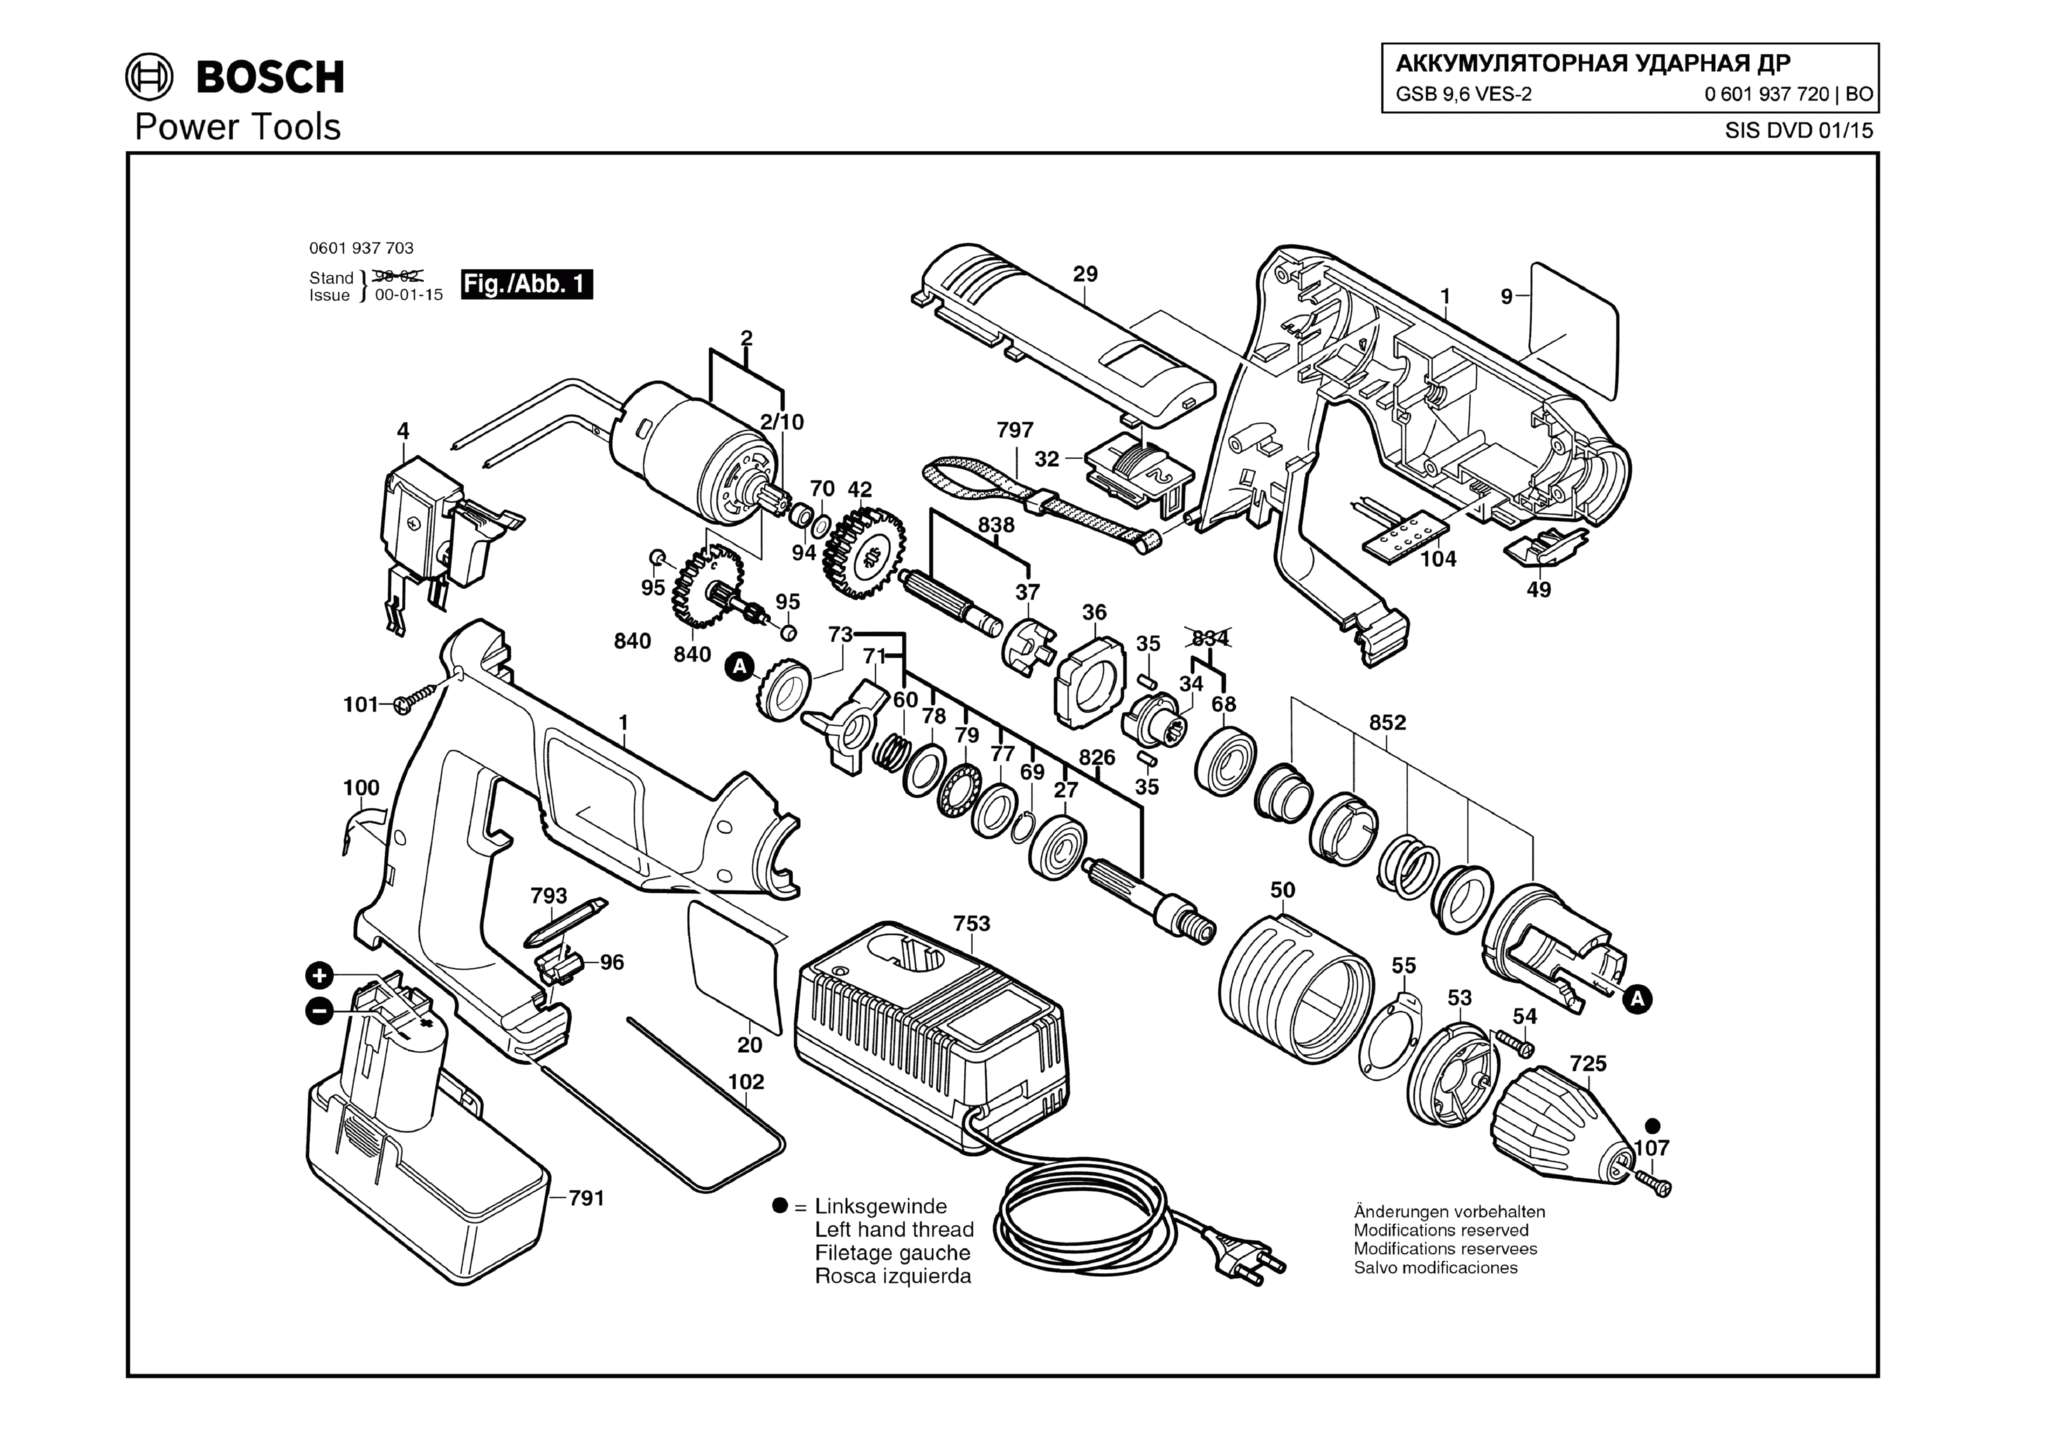 Запчасти, схема и деталировка Bosch GSB 9,6 VES-2 (ТИП 0601937720)